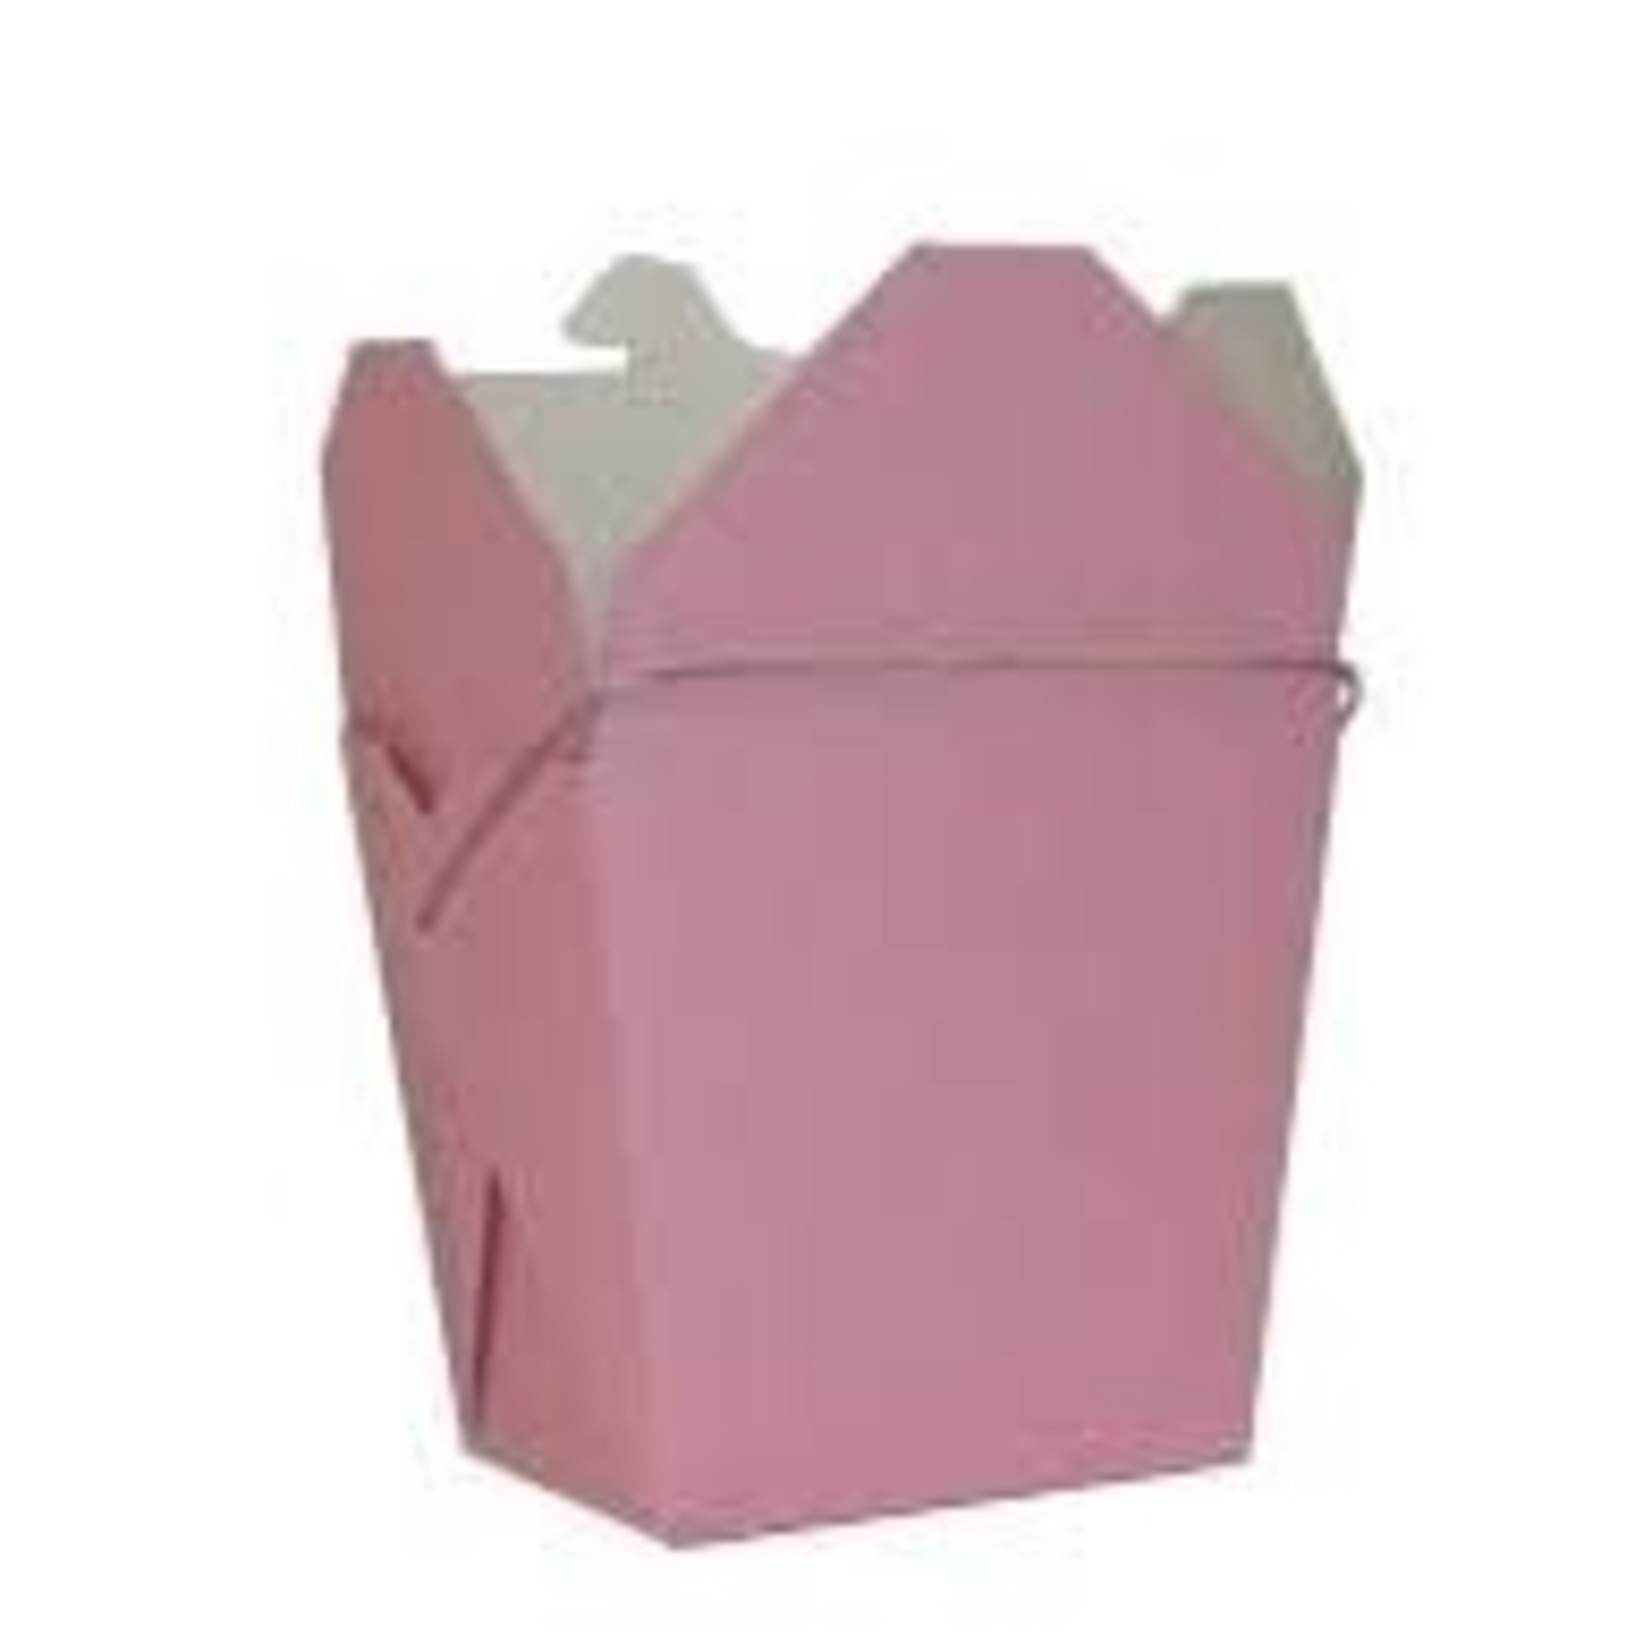 Take Out Pink Boxes